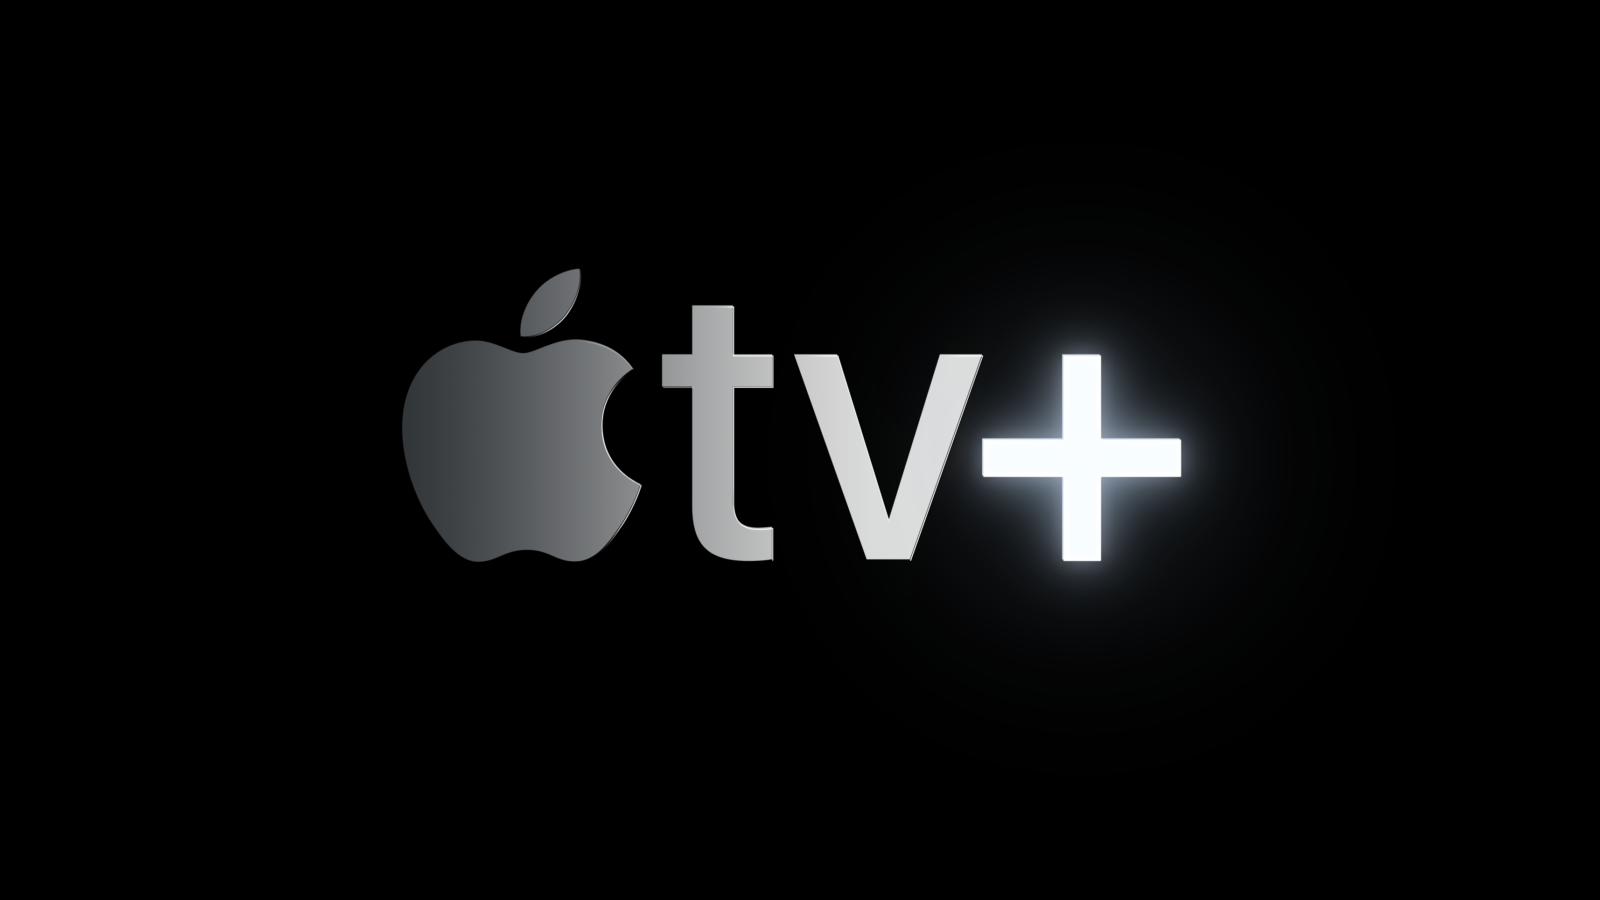 Apple TV buys first Spanish language series